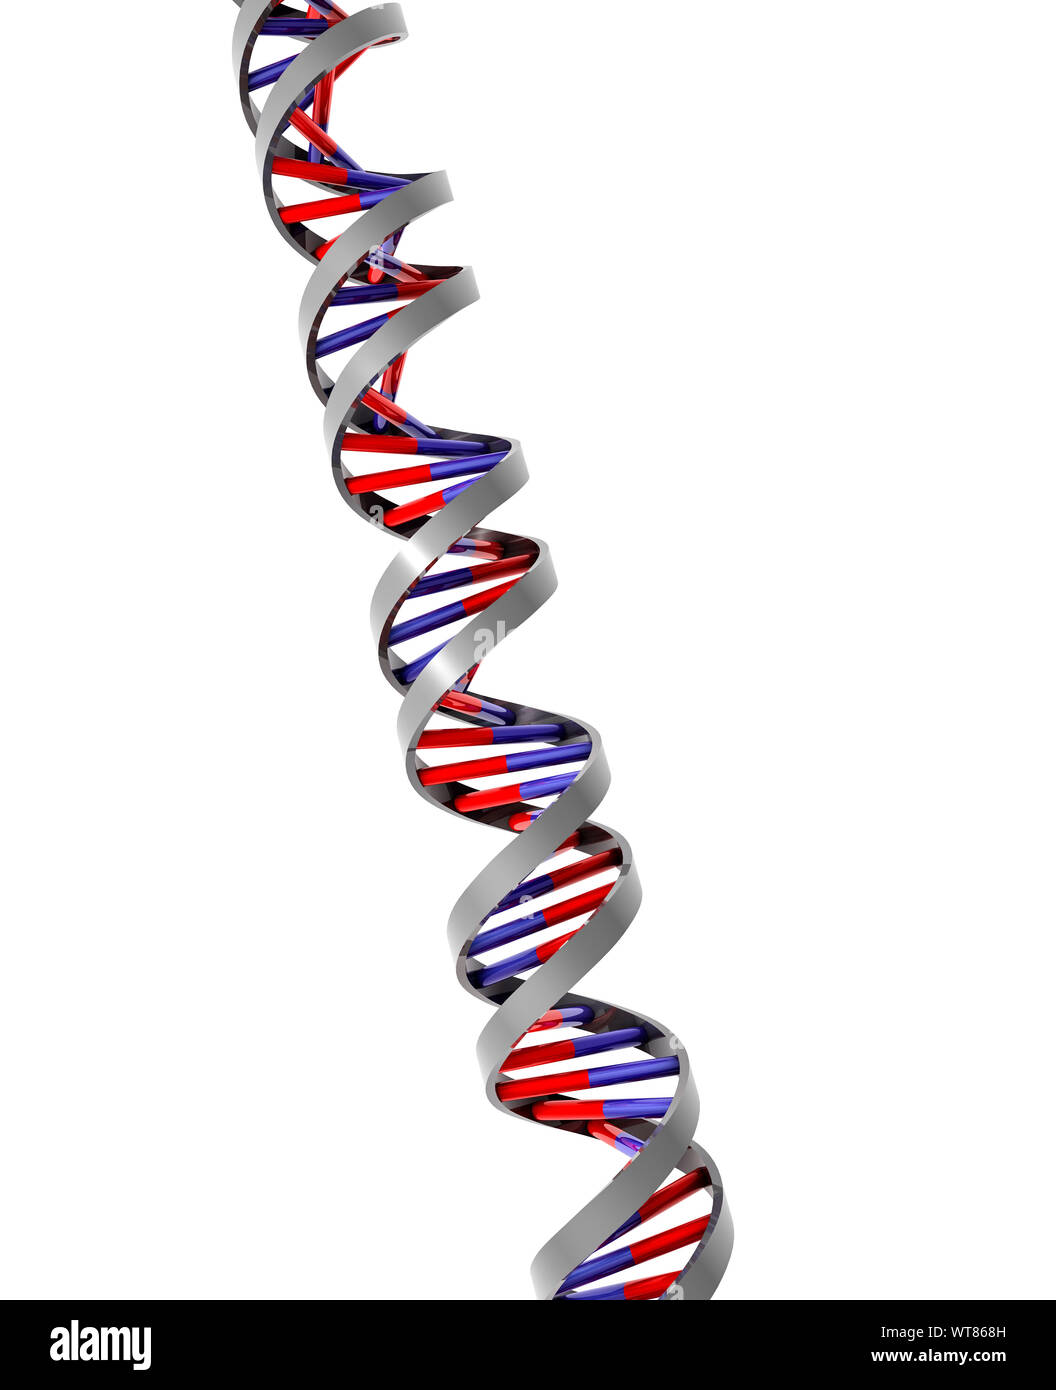 DNA double helix molecular strand model Stock Photo